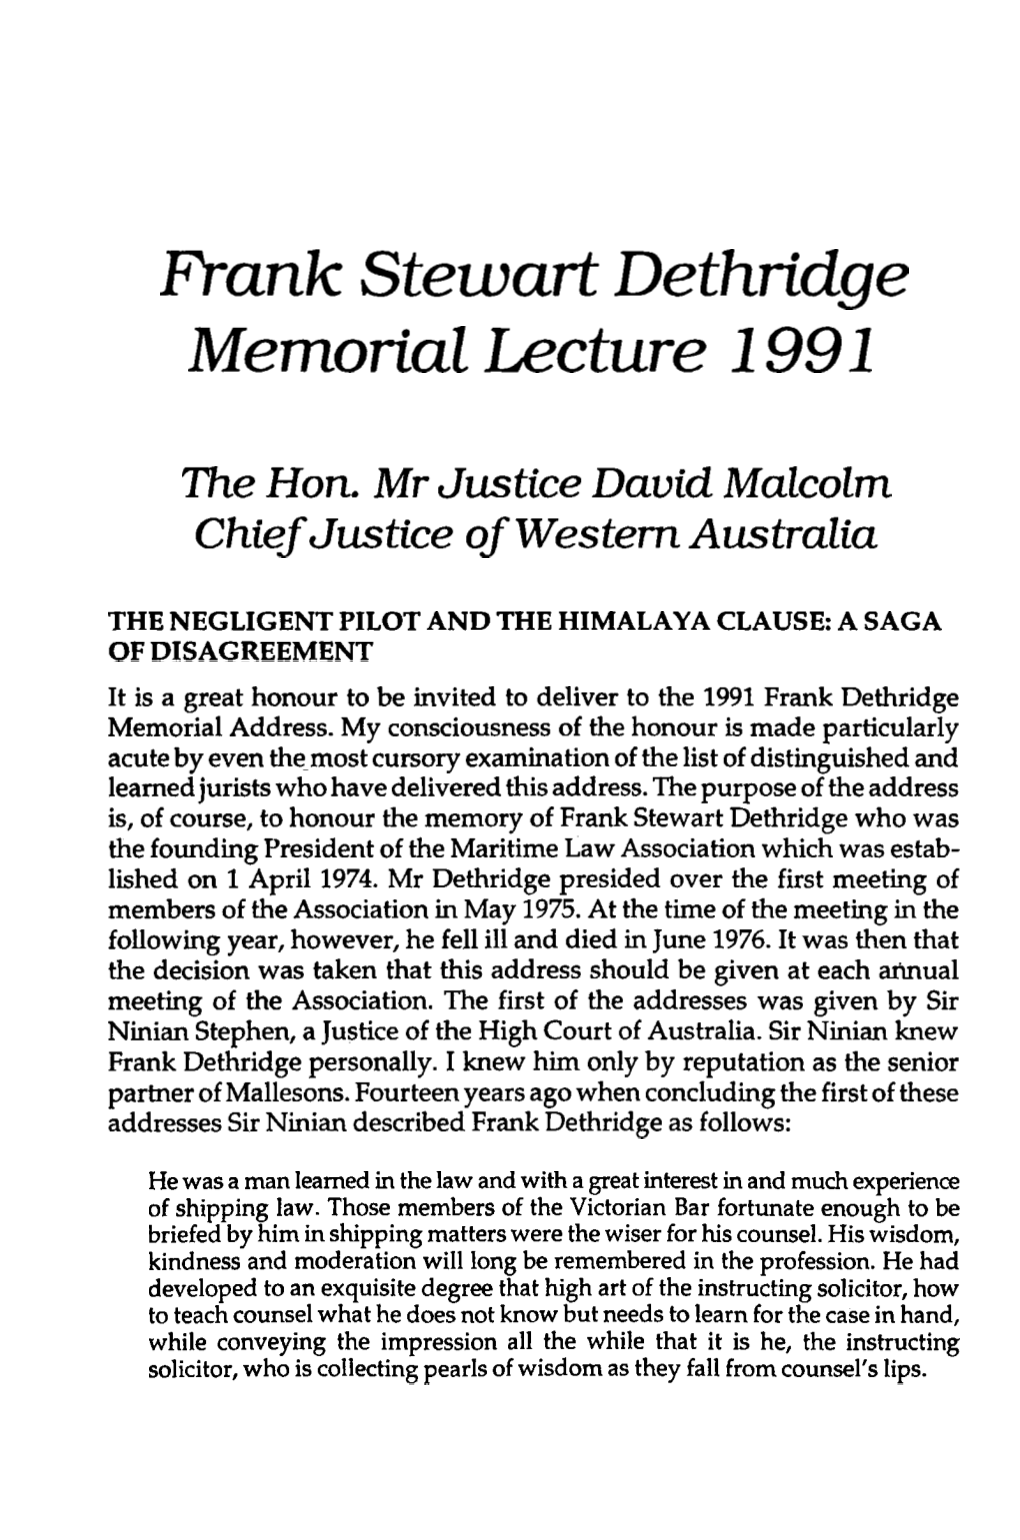 Memorial Lecture 1 991